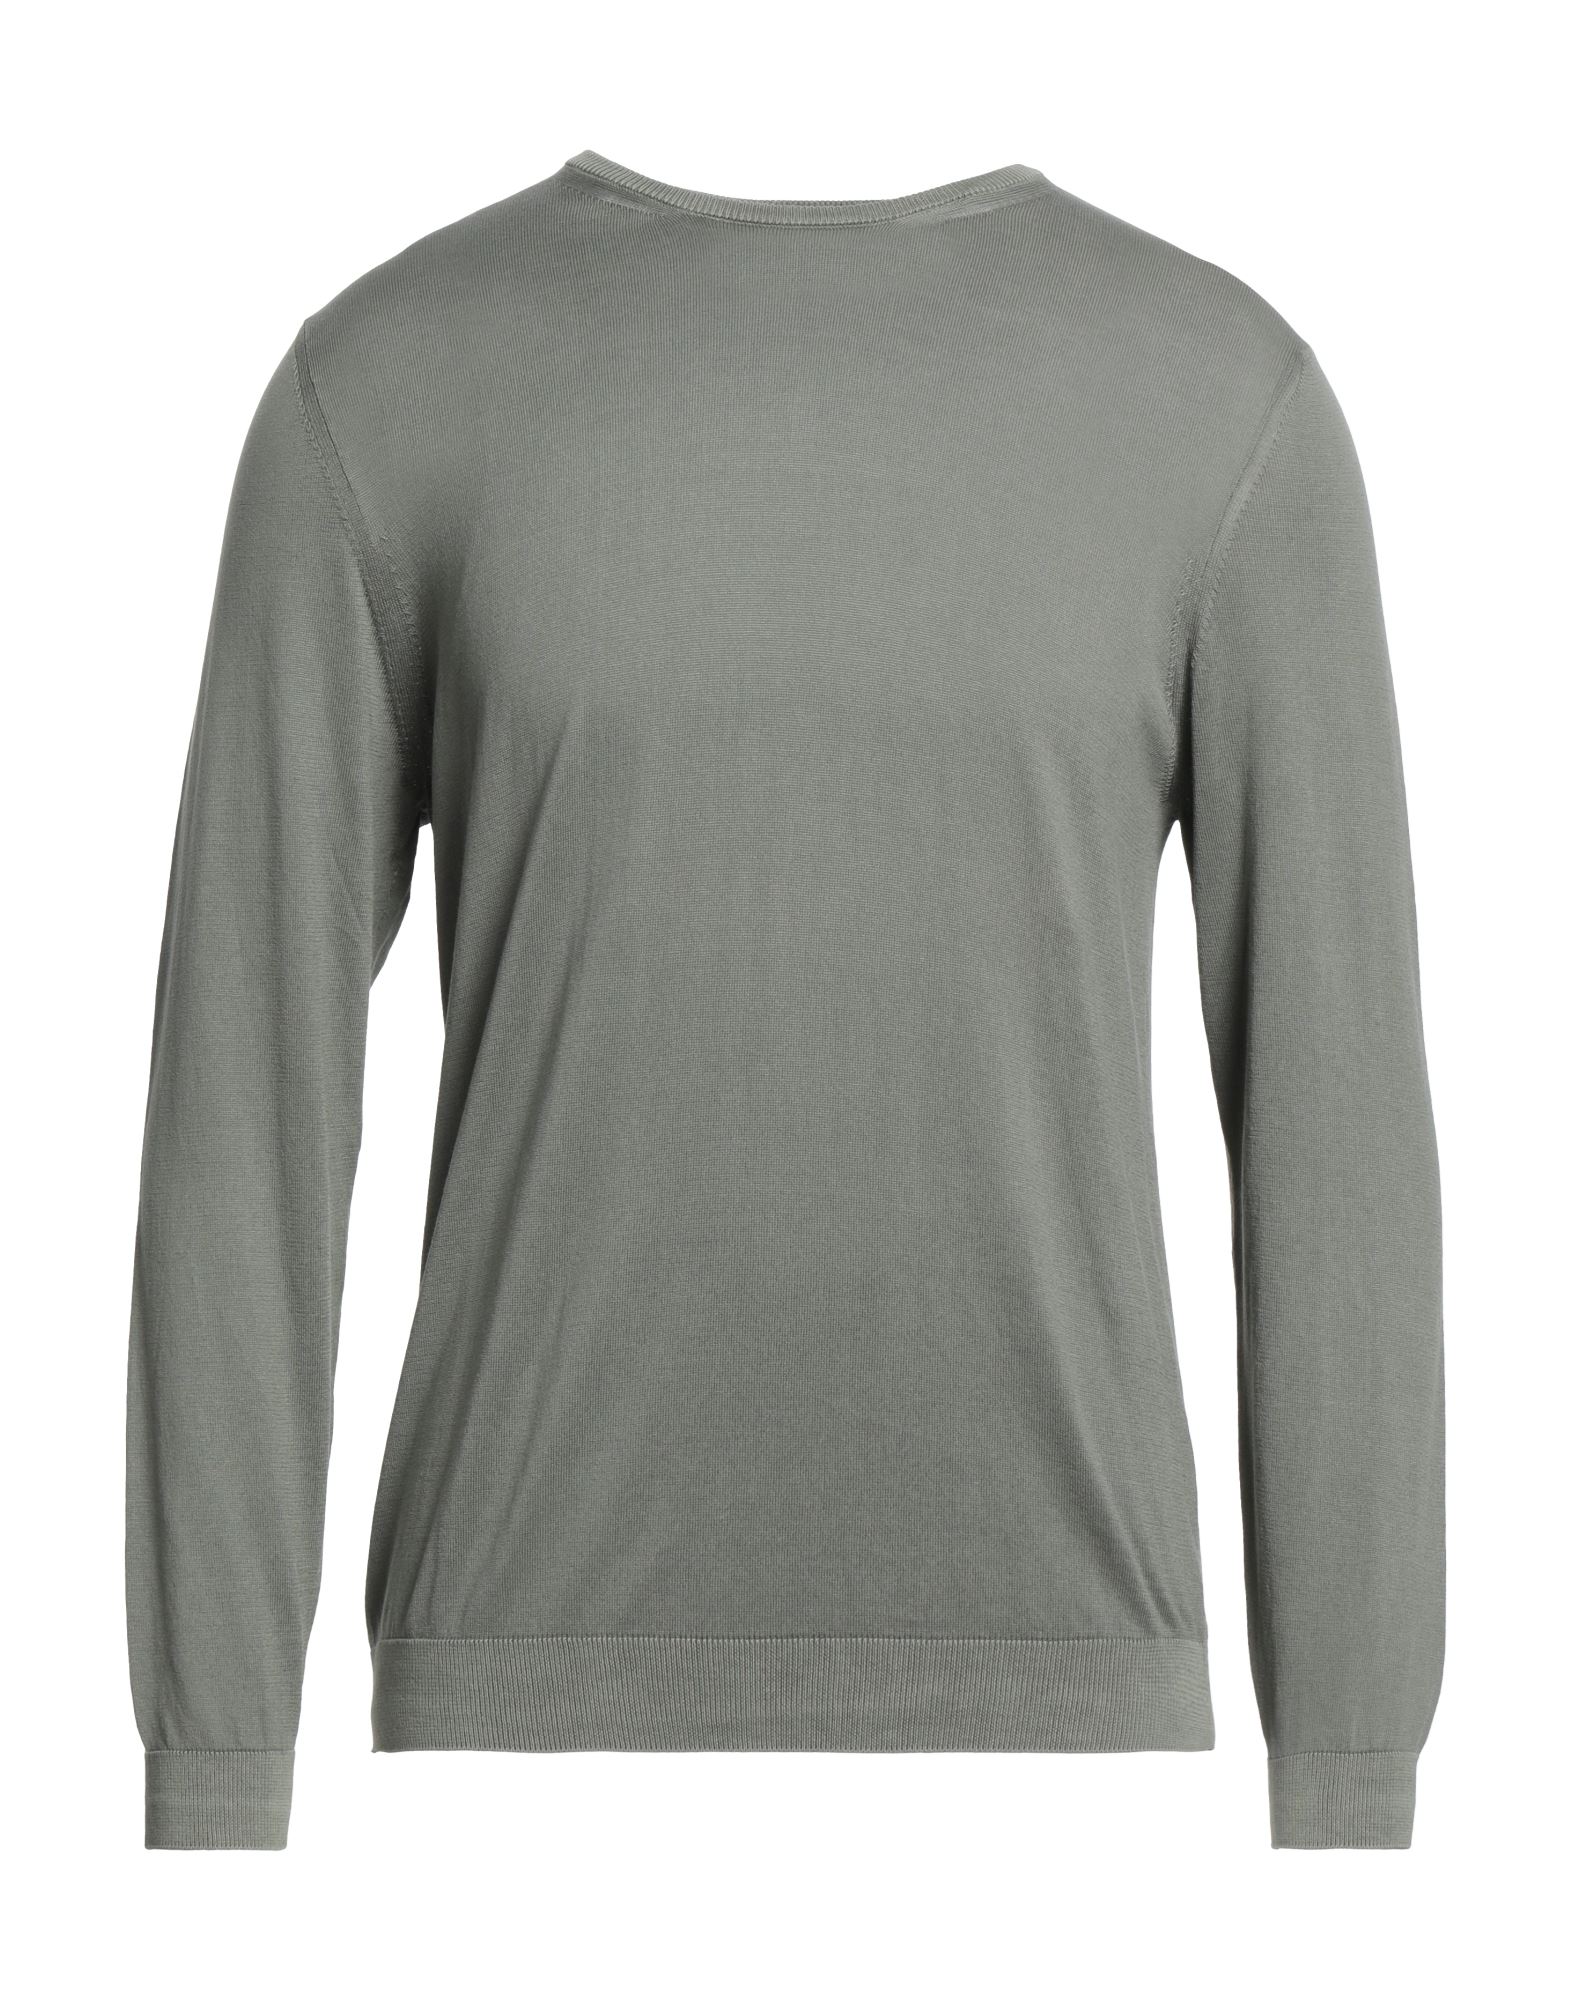 +39 Masq Man Sweater Military Green Size Xl Cotton